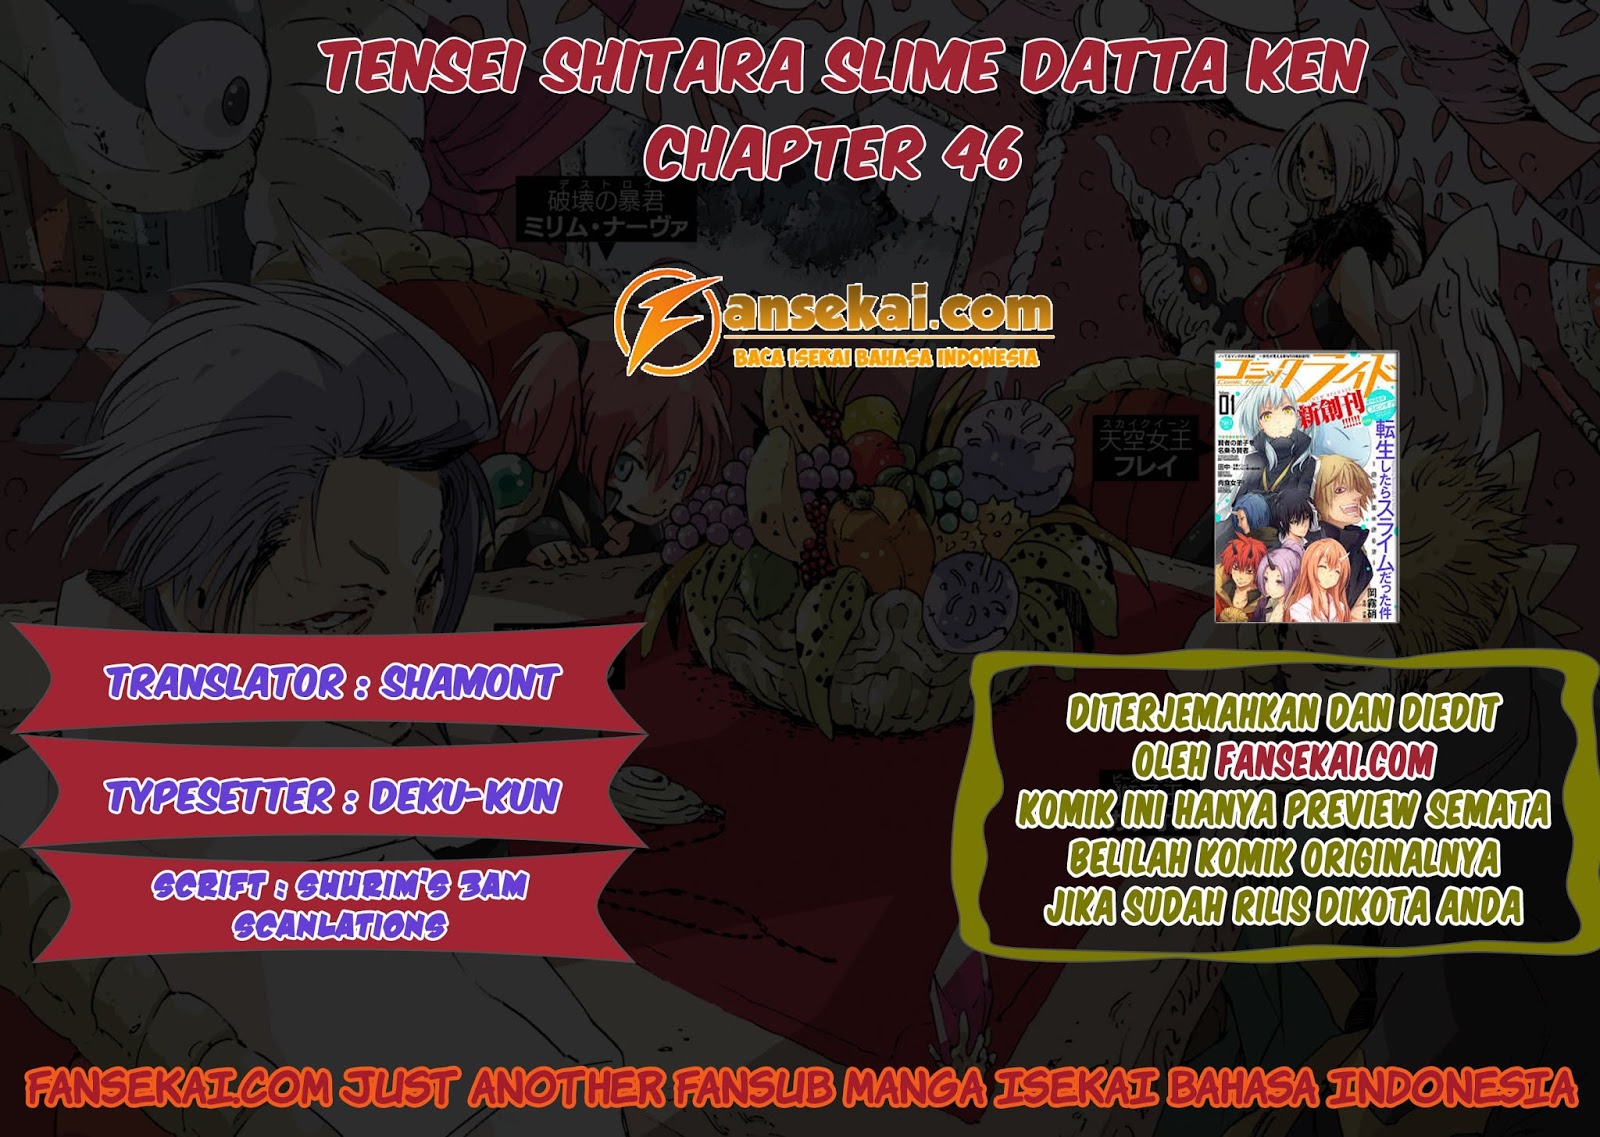 Tensei Shitara Slime Datta Ken Chapter 46